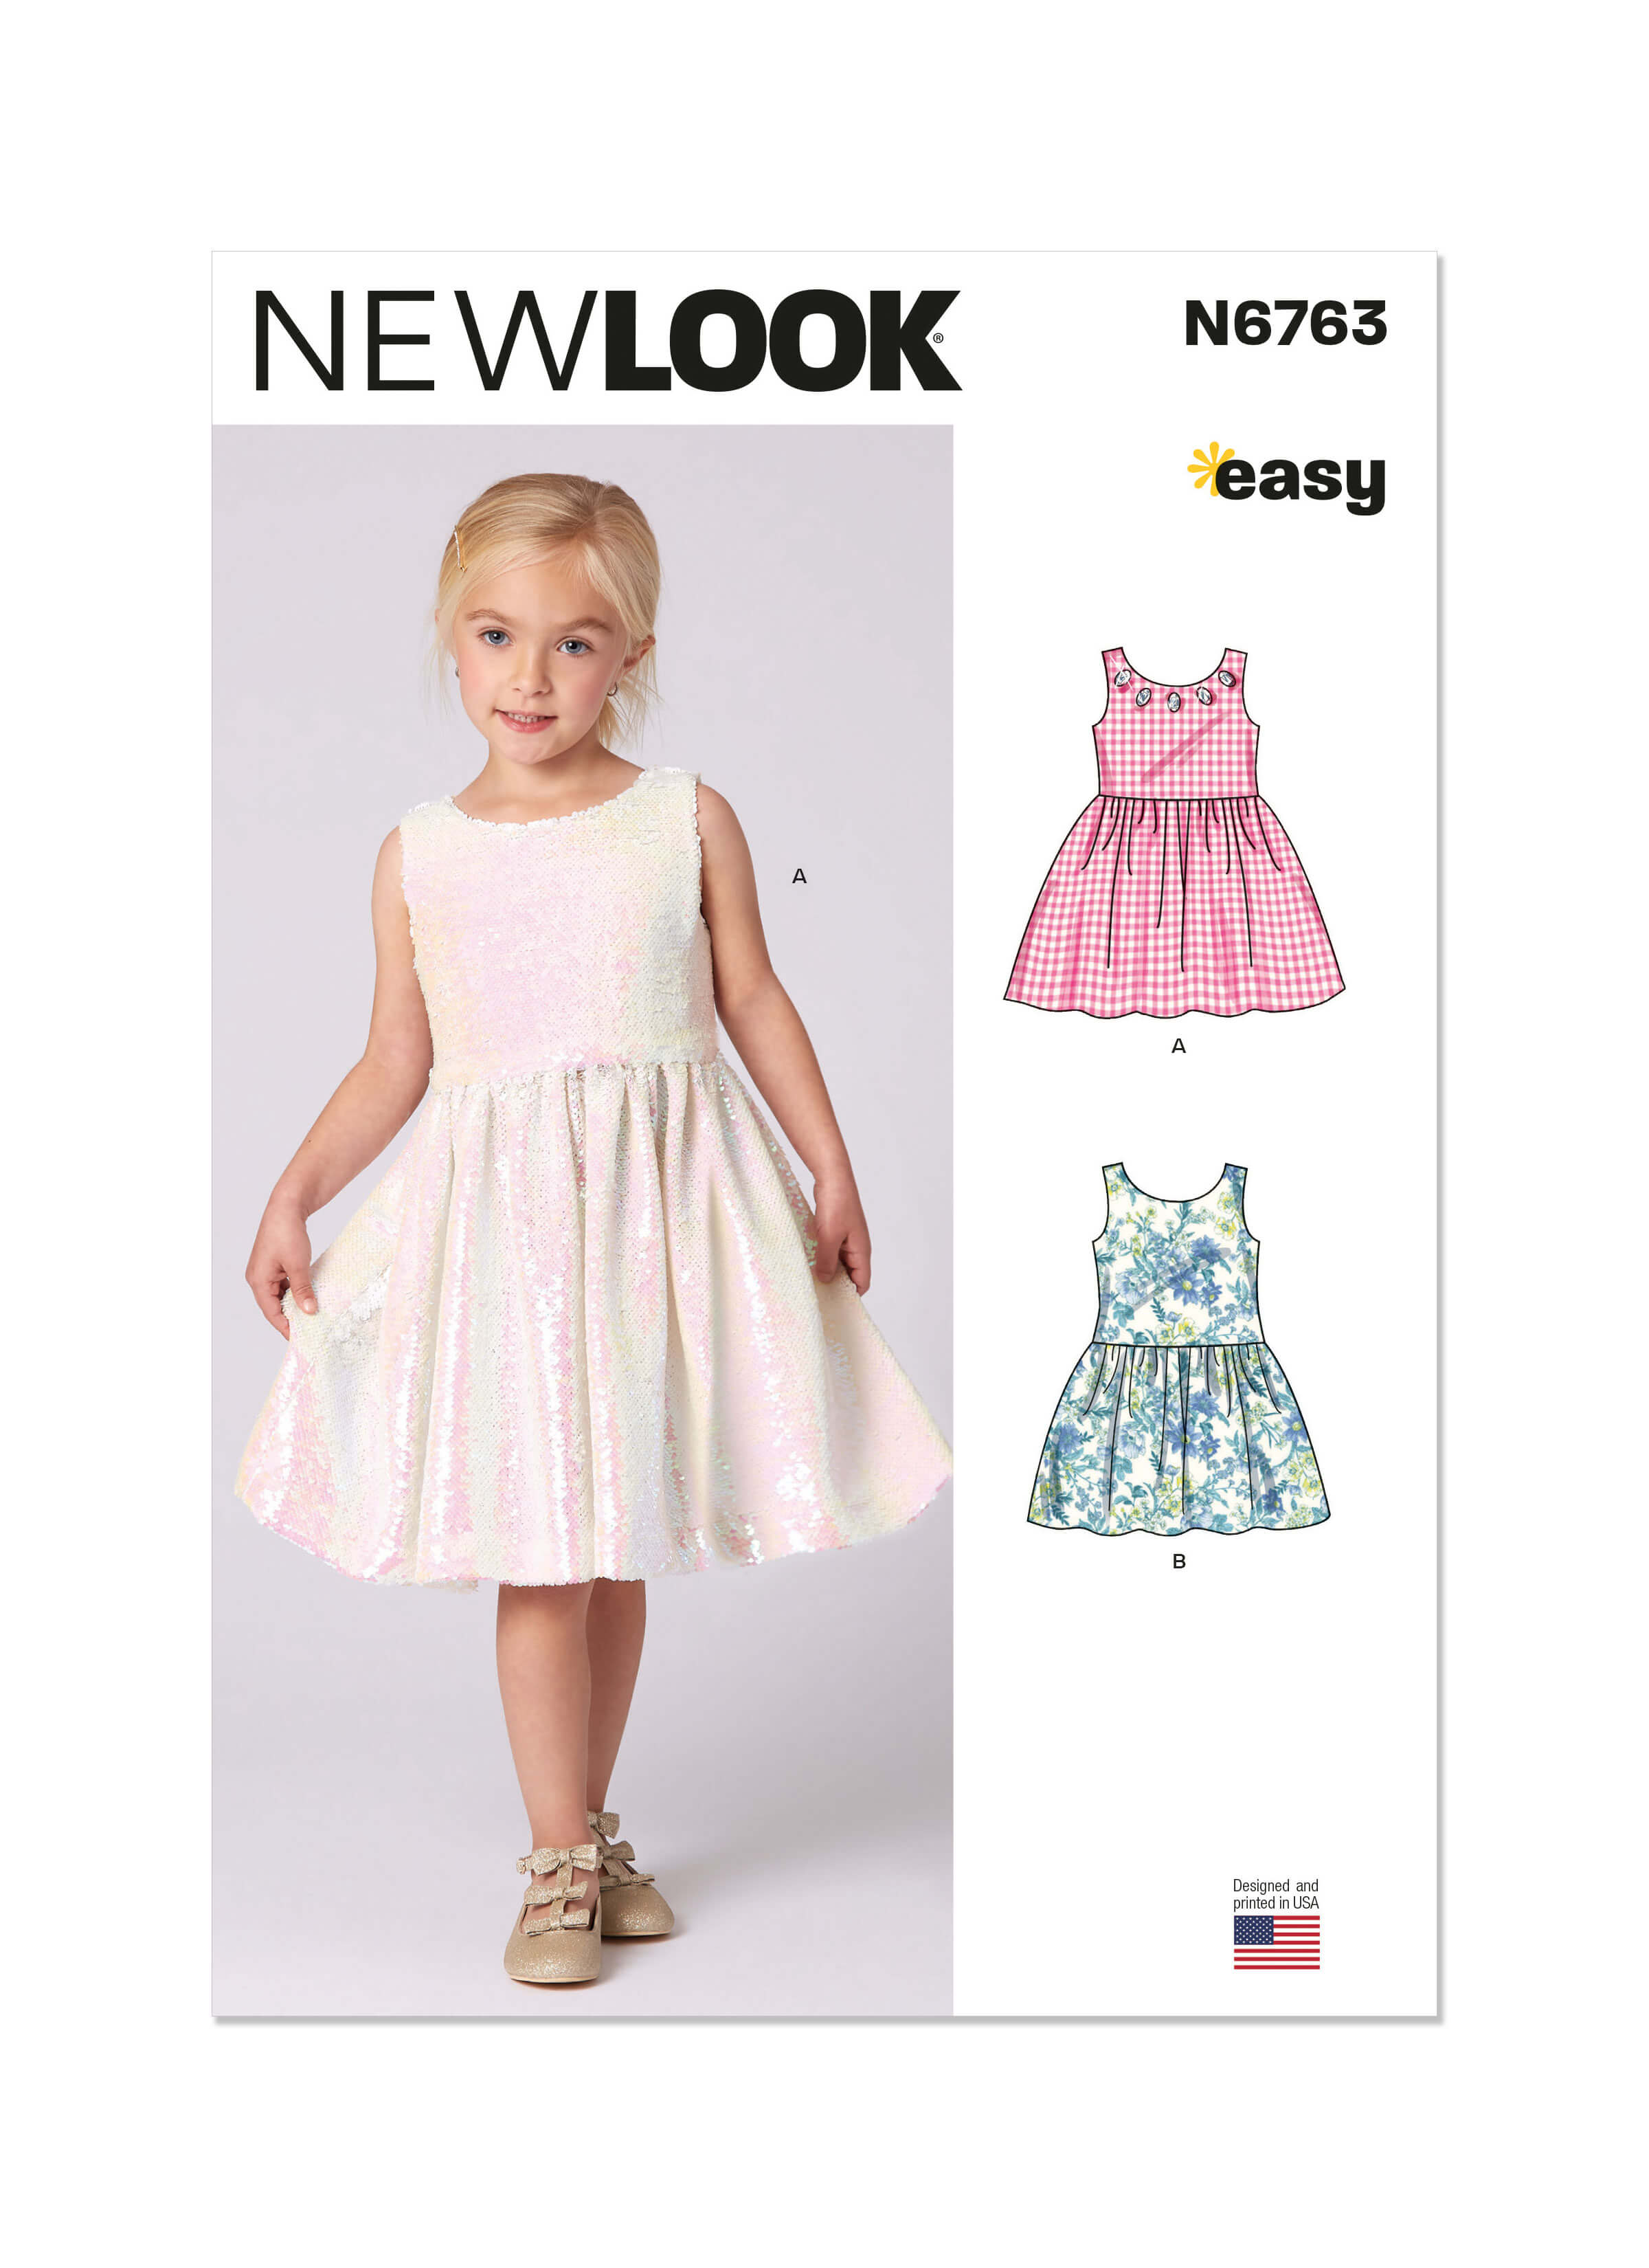 New Look Sewing Pattern N6763 Children's Dress